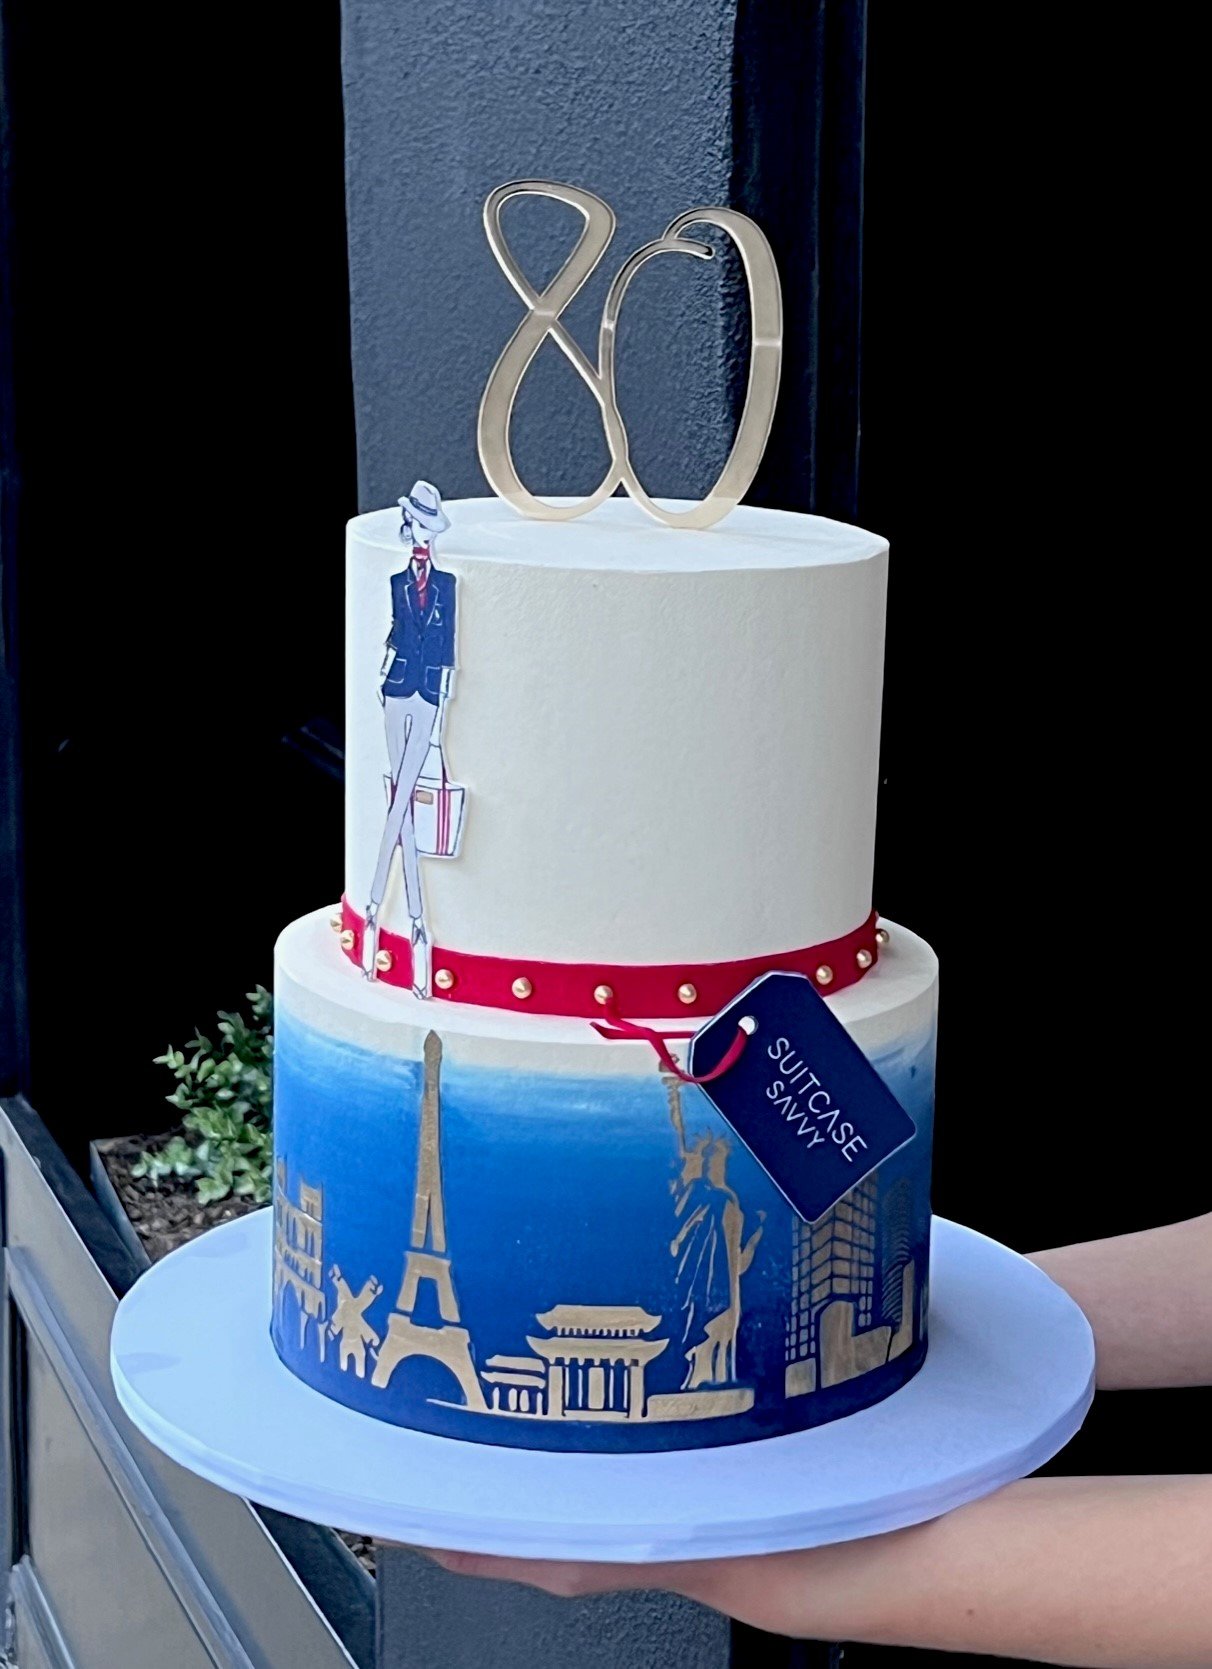 vanillapod-vanillapodspecialtycakes-bakery-celebrationcake-baptismcake-birthdaycake-frenchcake-frenchinspired-2.jpg